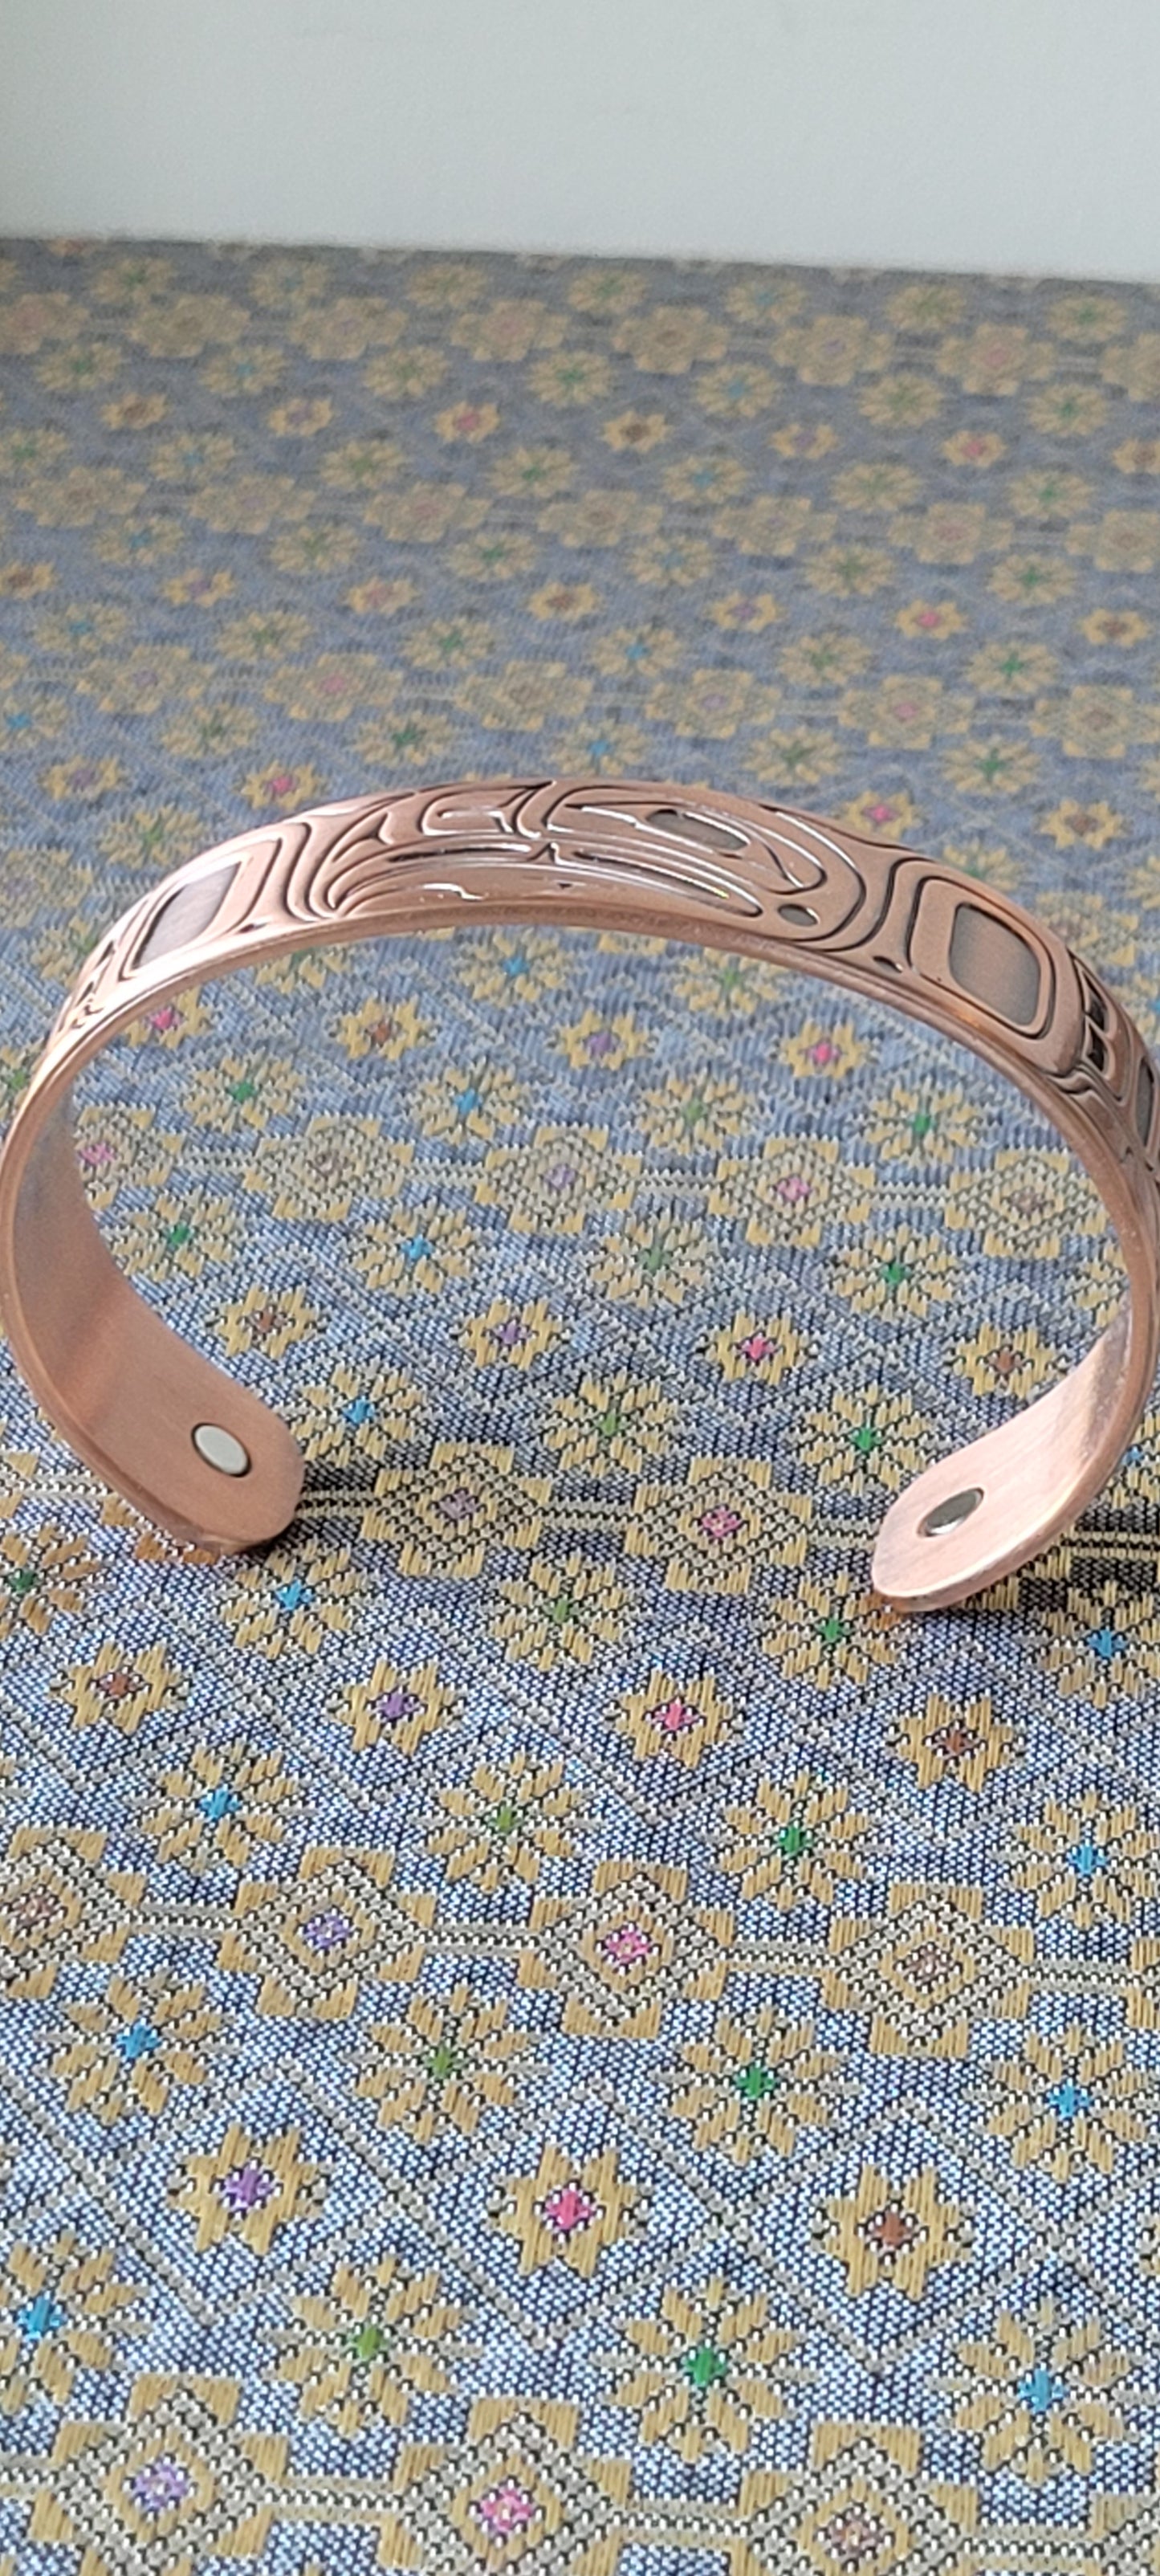 Eagle Copper Cuff Bracelet by Gordon White, Haida